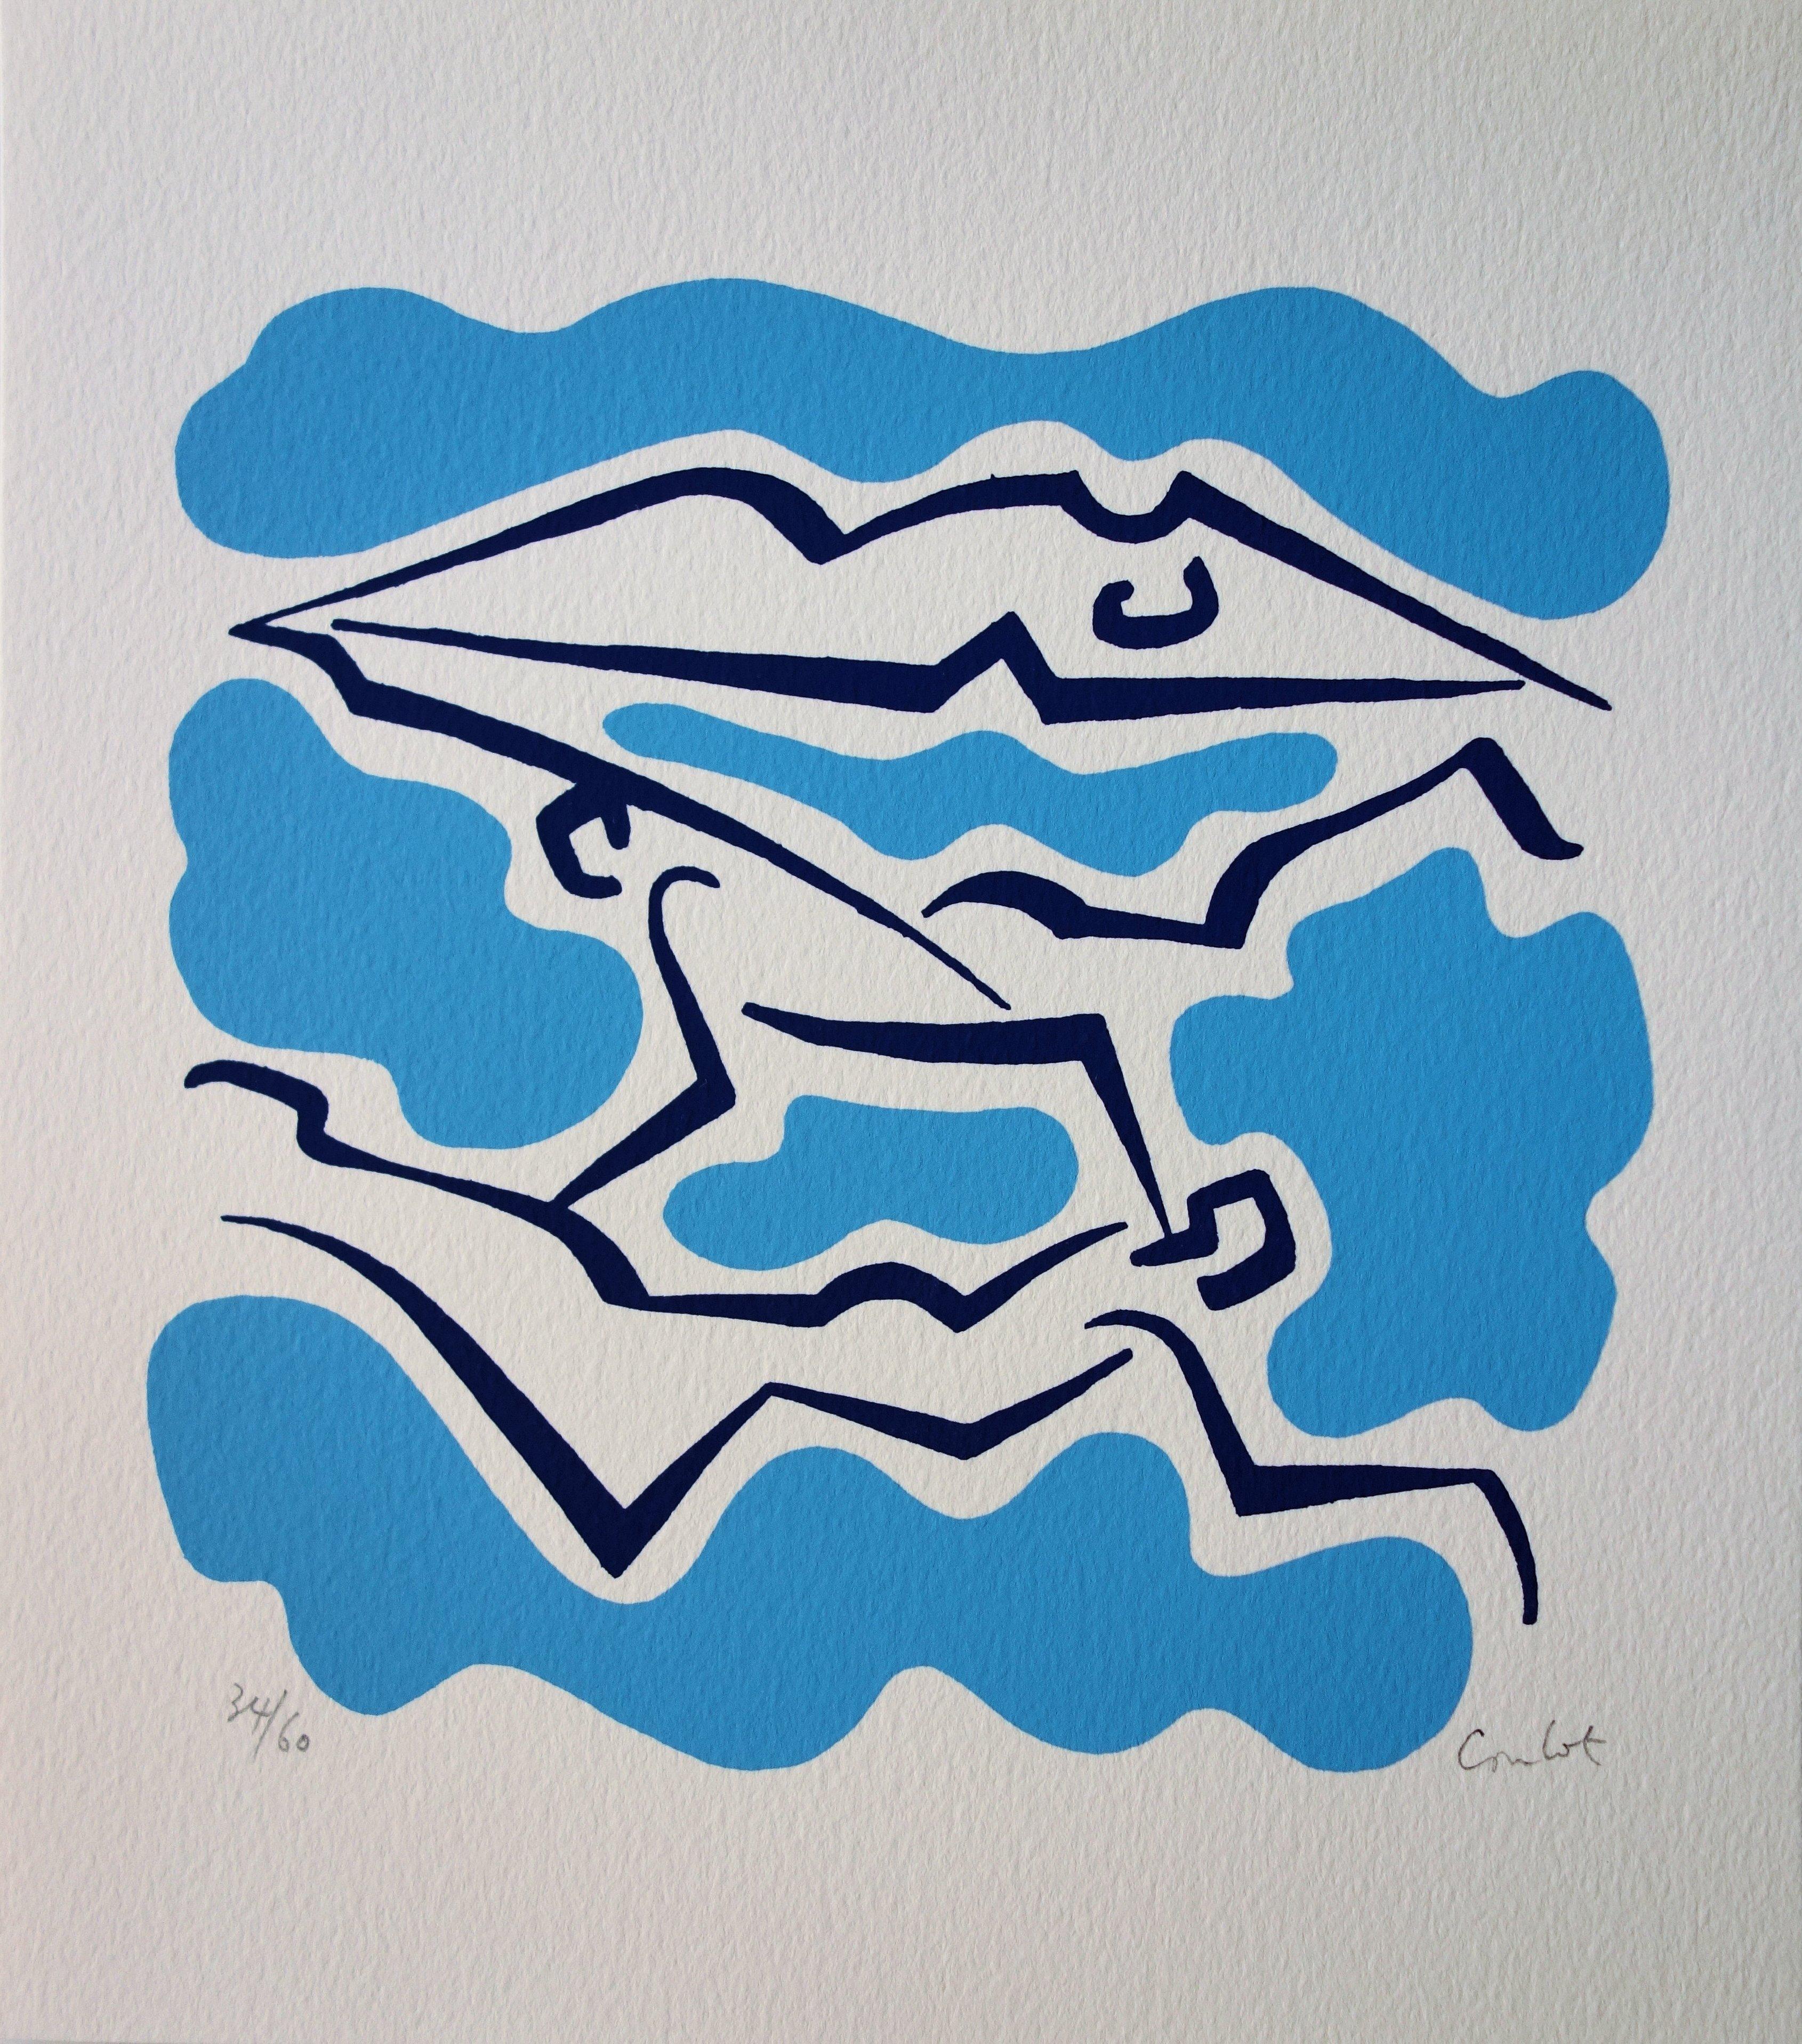 Jean Coulot Figurative Print - Swimmers - Original Handsigned Screen Print /60ex